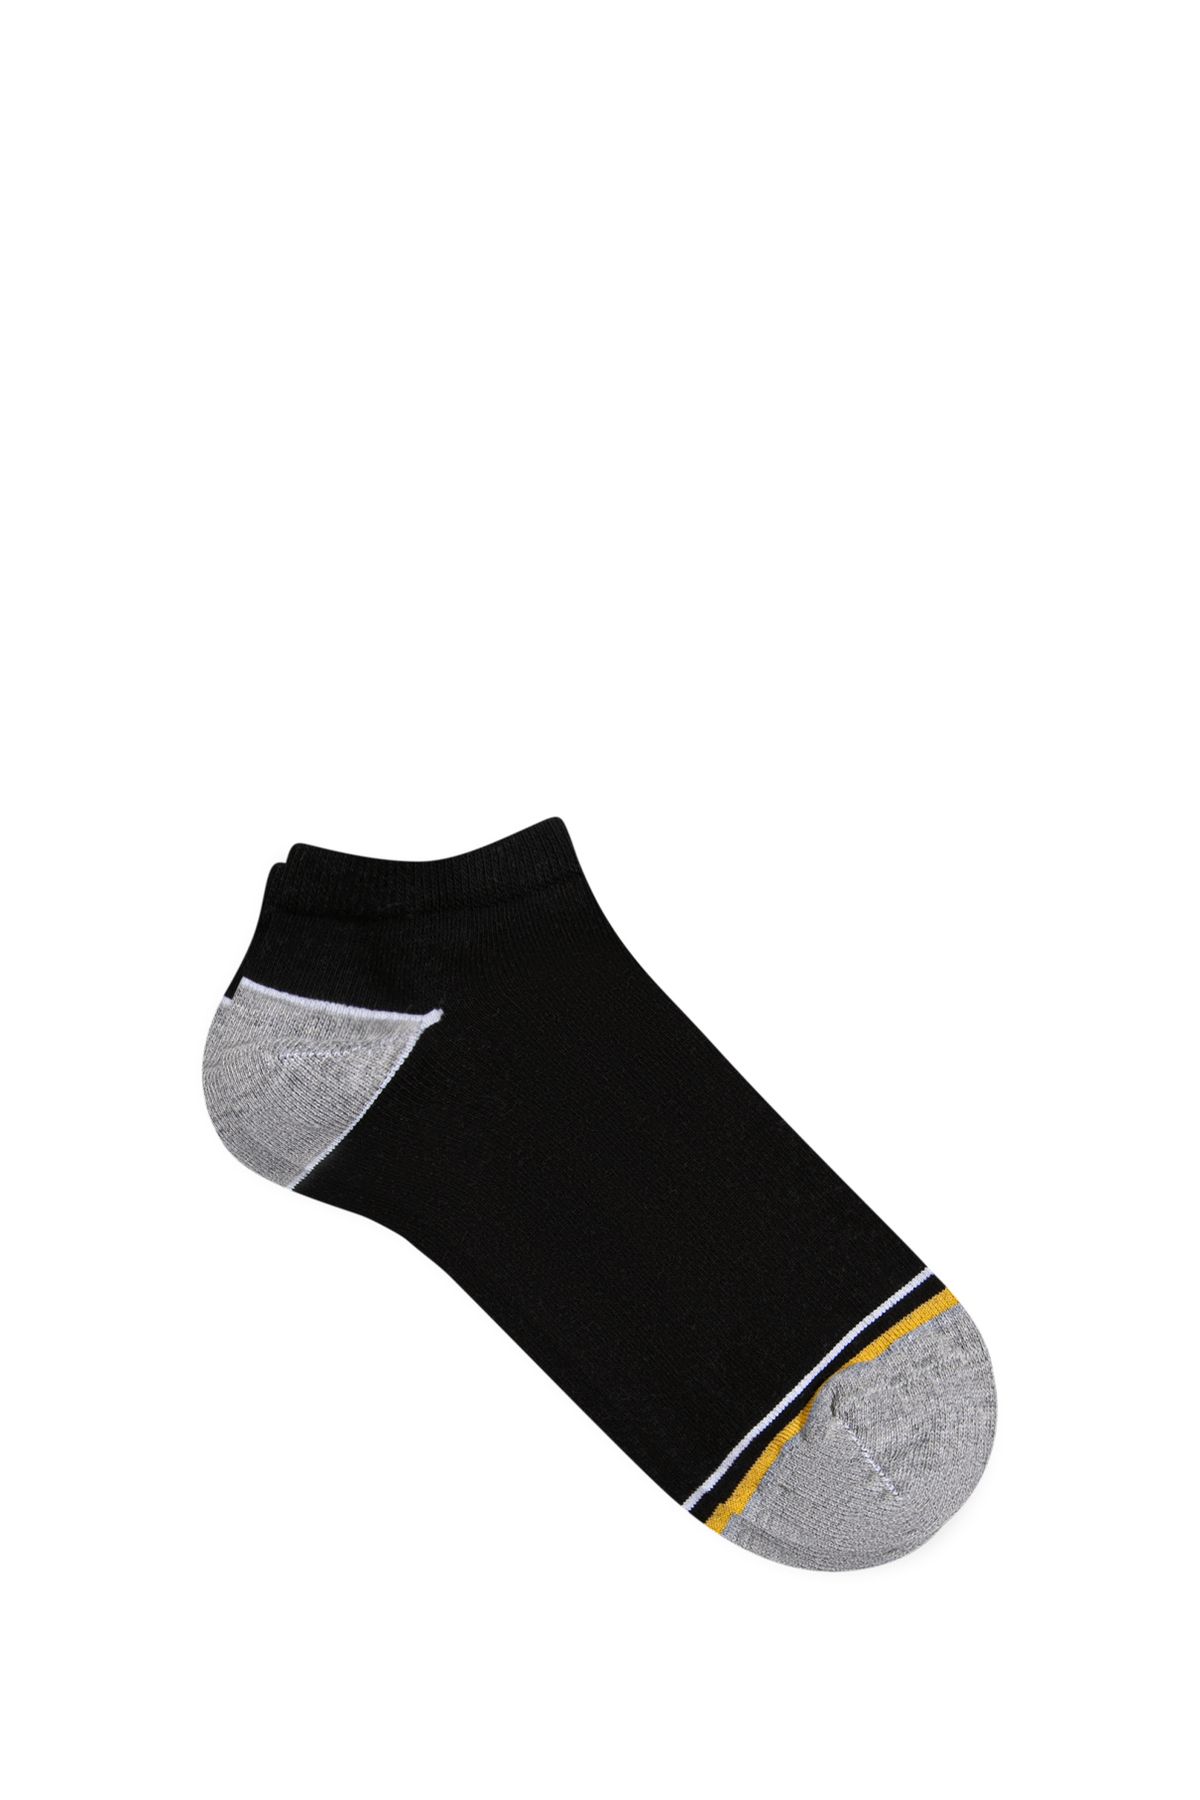 Mavi Siyah Patik Çorap 0911129-900